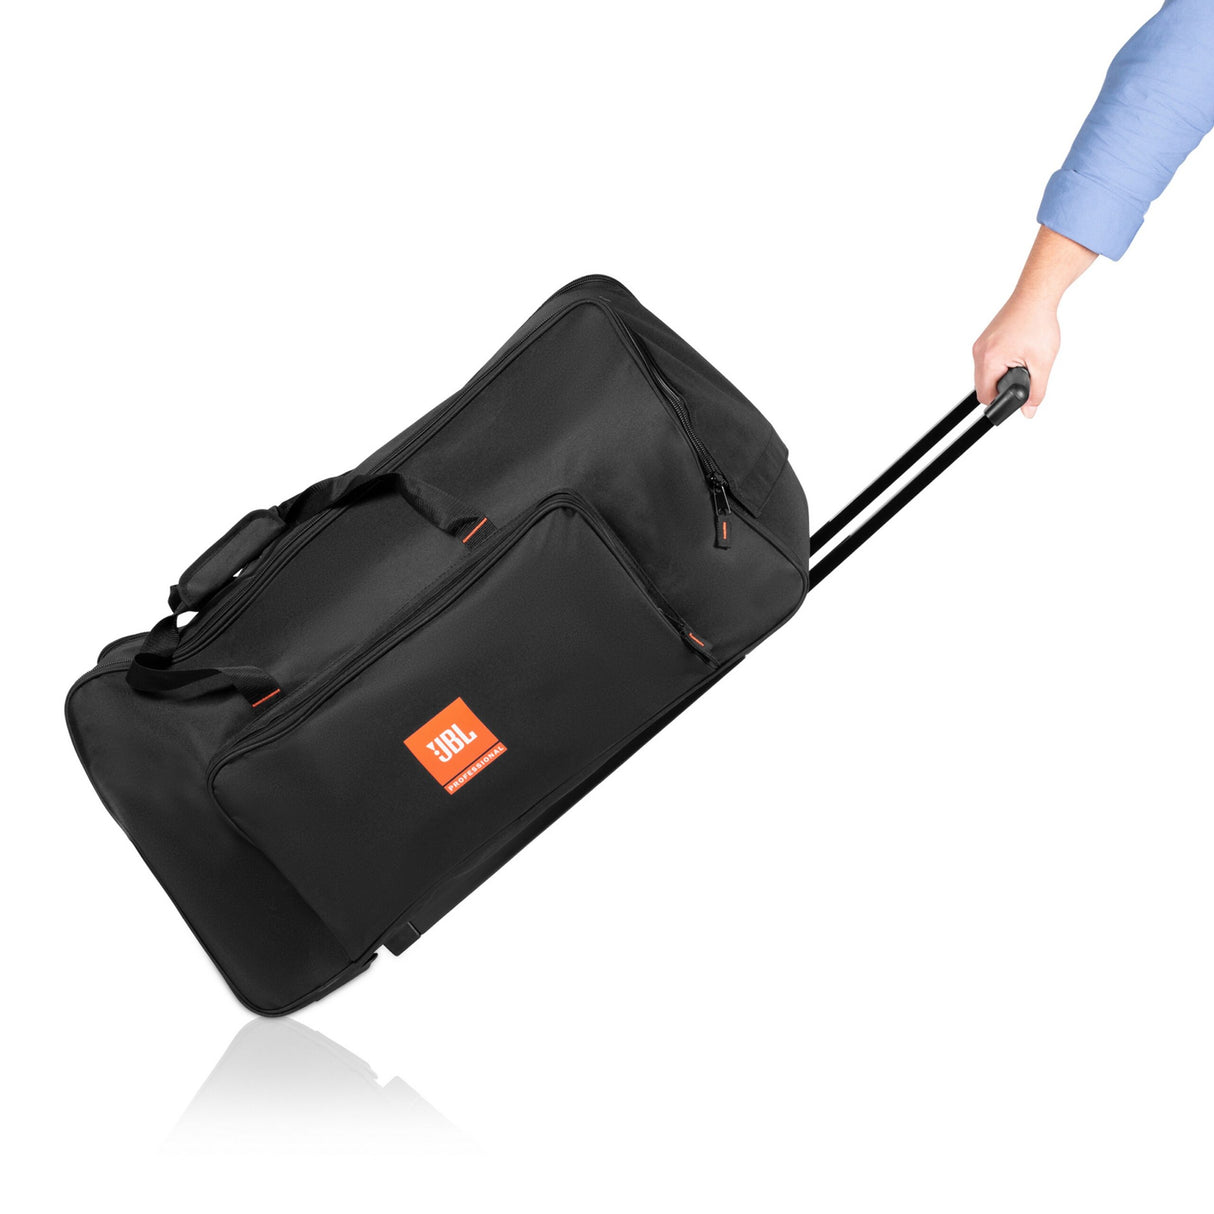 JBL EON715-BAG-W Tote Bag with Wheels for EON715 Speaker